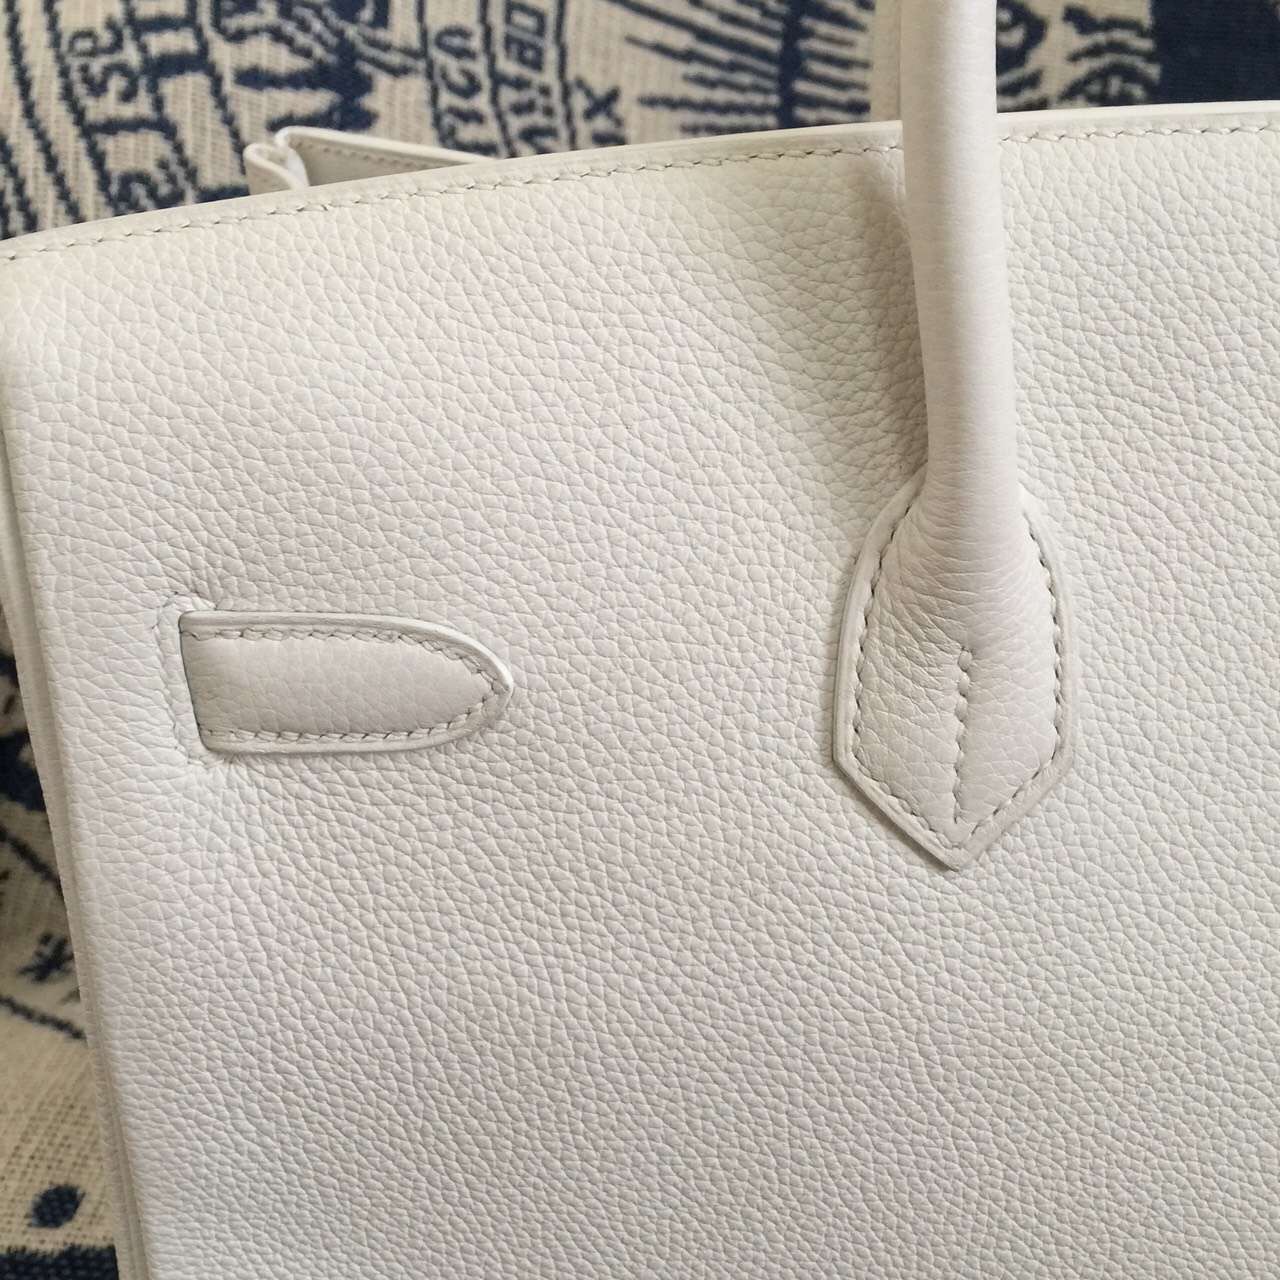 New Fashion Hermes White Togo Leather Birkin Bag 35CM Gold Hardware